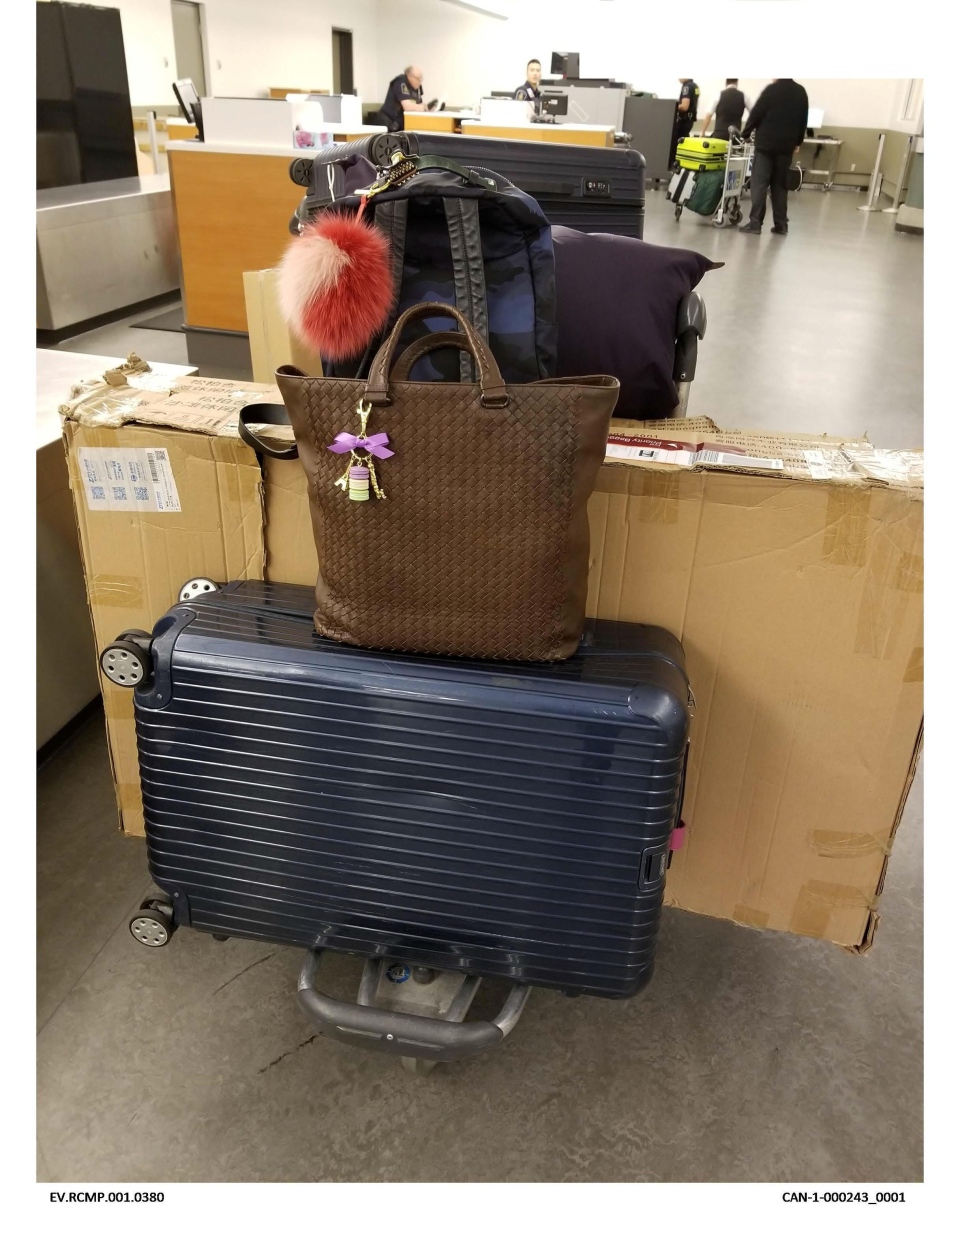 Meng Wanzhou’s luggage